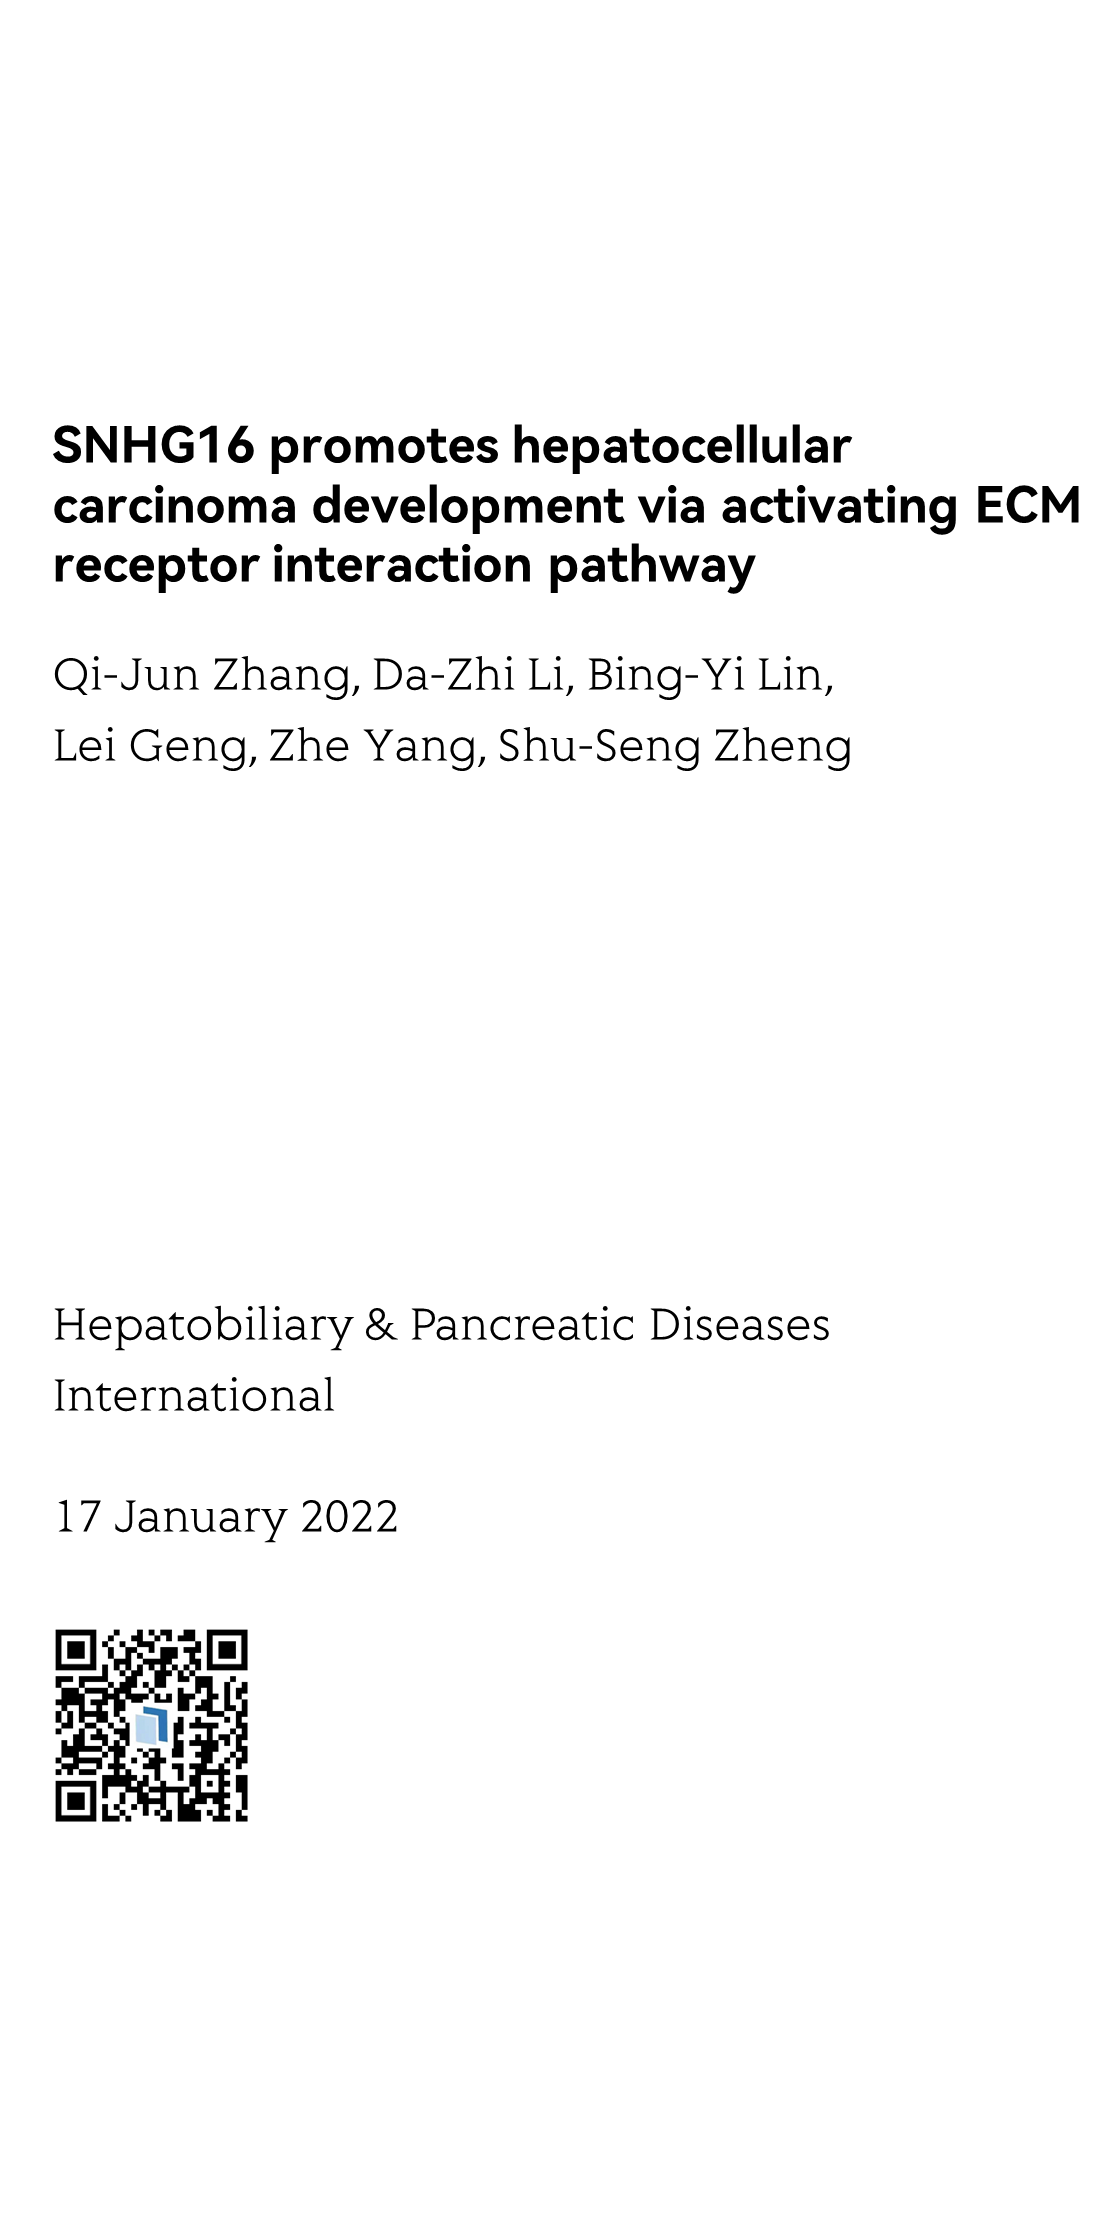 Hepatobiliary & Pancreatic Diseases International_1